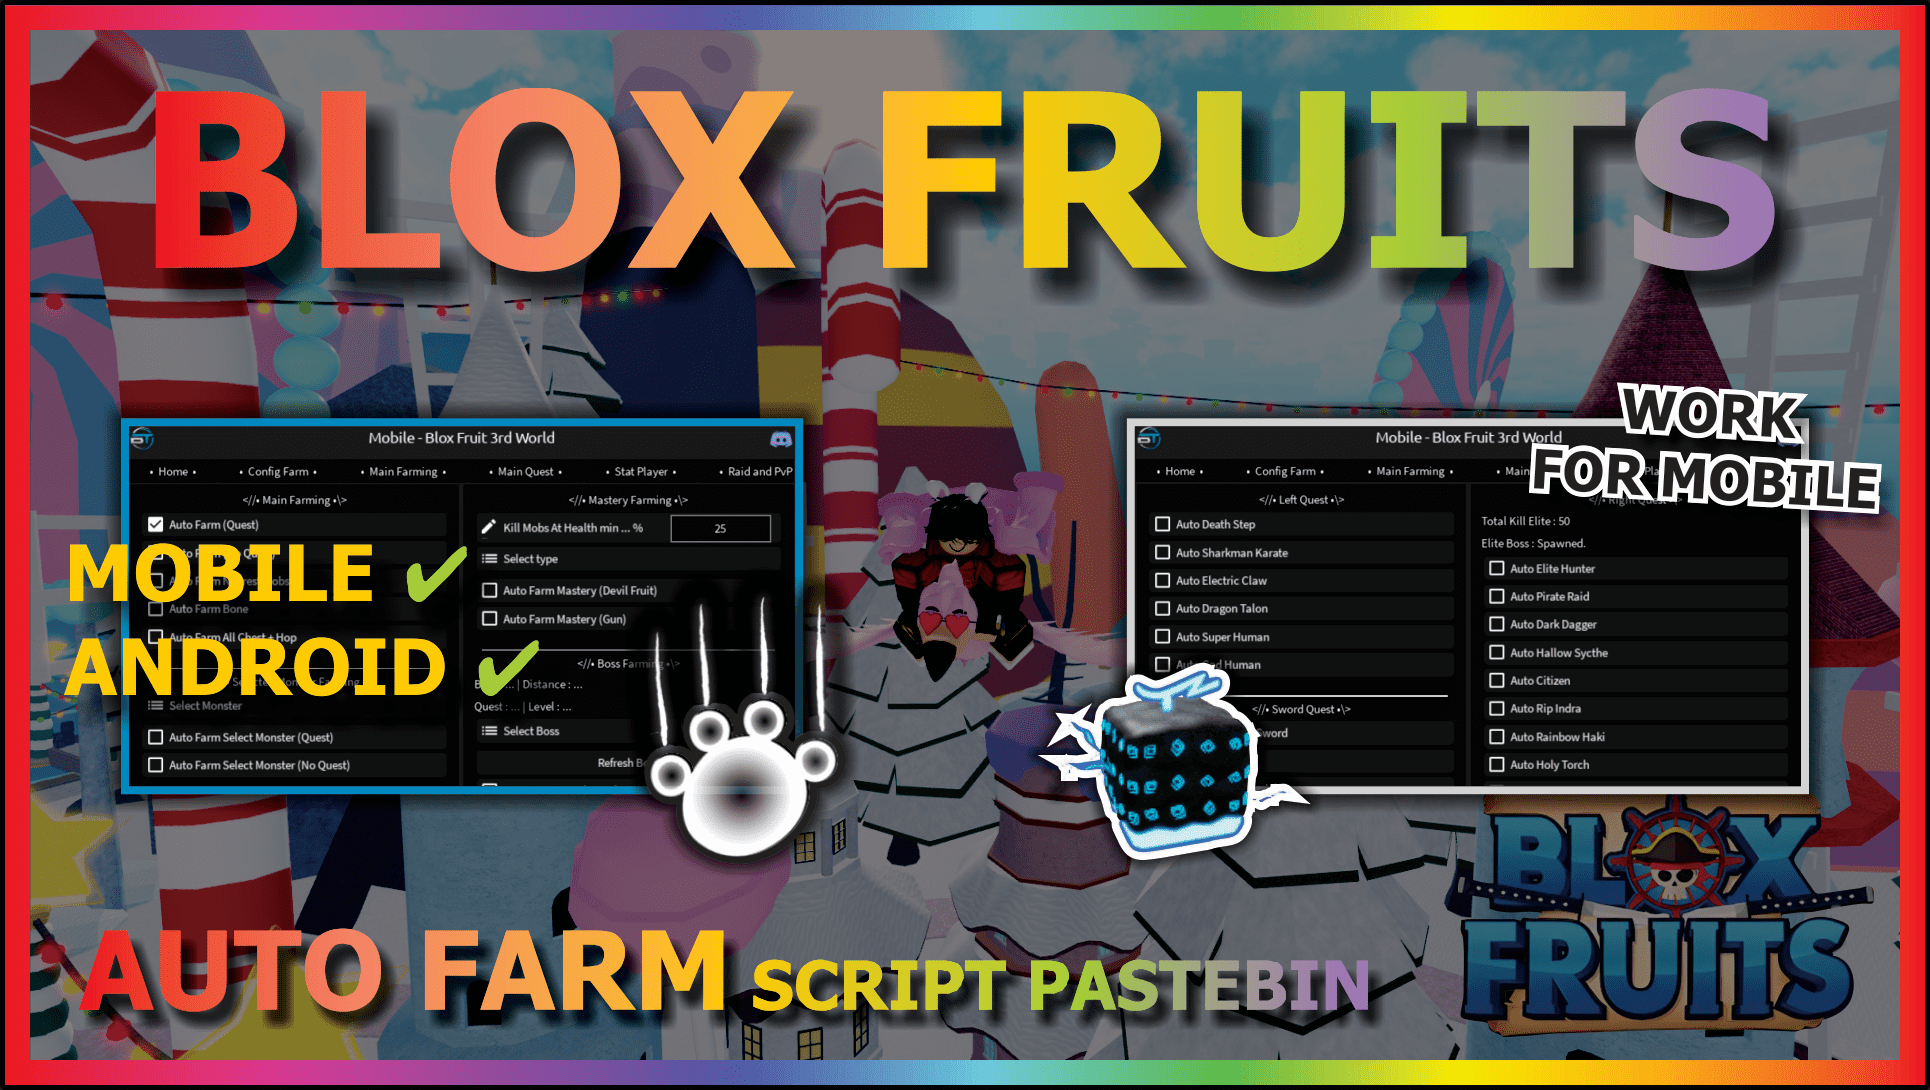 Fluxus EXECUTOR + Blox Fruits SCRIPT